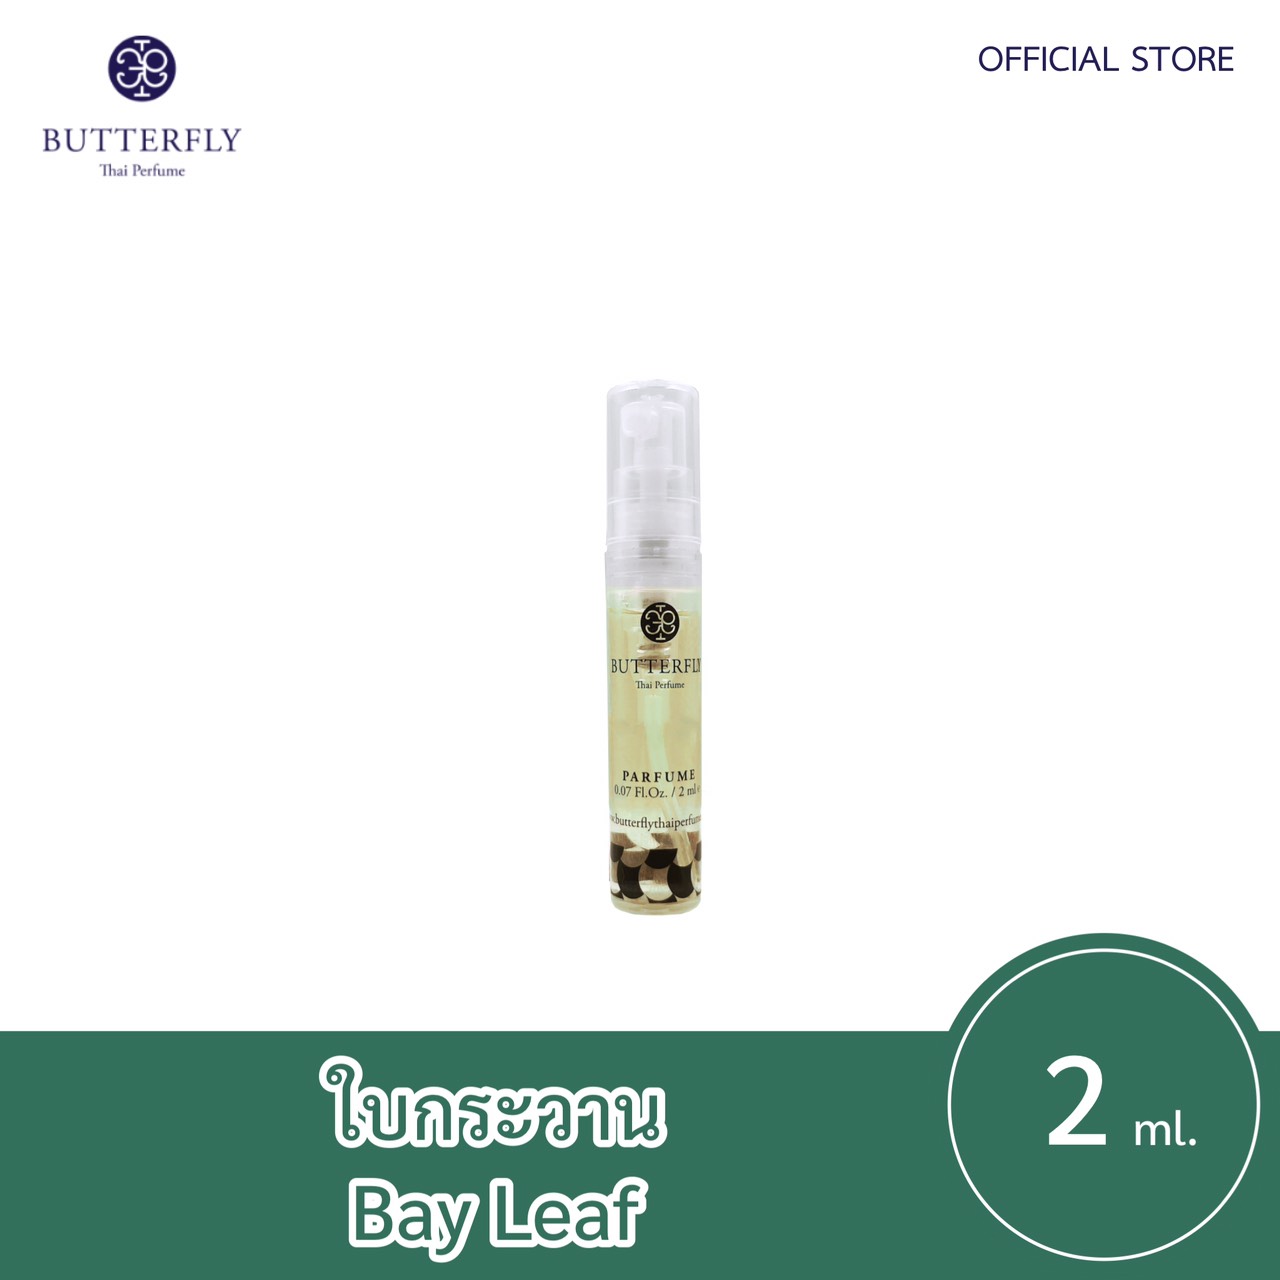 Butterfly Thai Perfume - น้ำหอมบัตเตอร์ฟลาย ไทย เพอร์ฟูม  ขนาดทดลอง 2ml.  กลิ่น ใบกระวานปริมาณ (มล.) 2